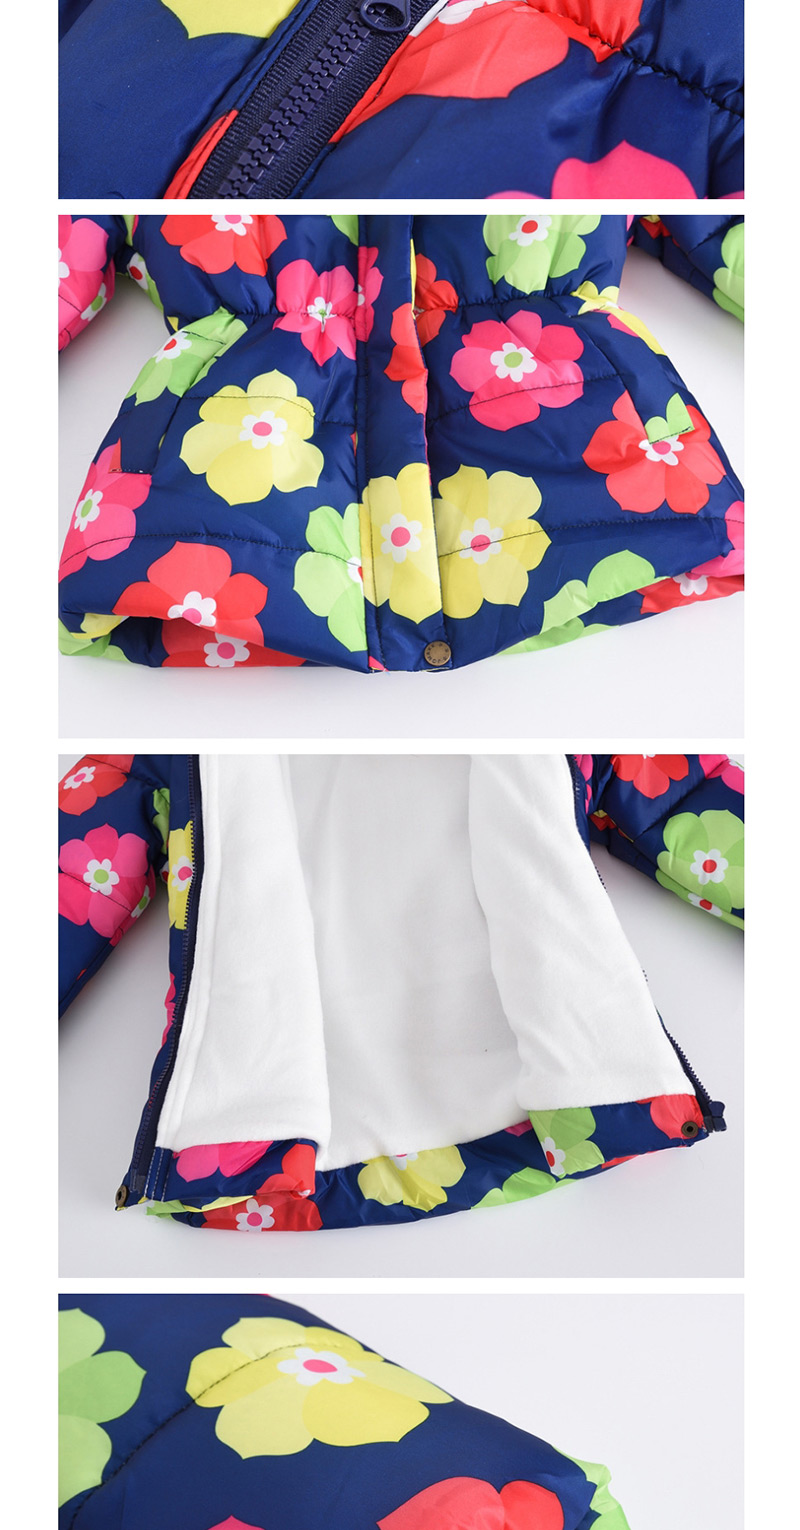 Fashion Foundation Color Butterfly Flower Print Cartoon Fur Collar Big Boy Hooded Cotton Coat,Kids Clothing